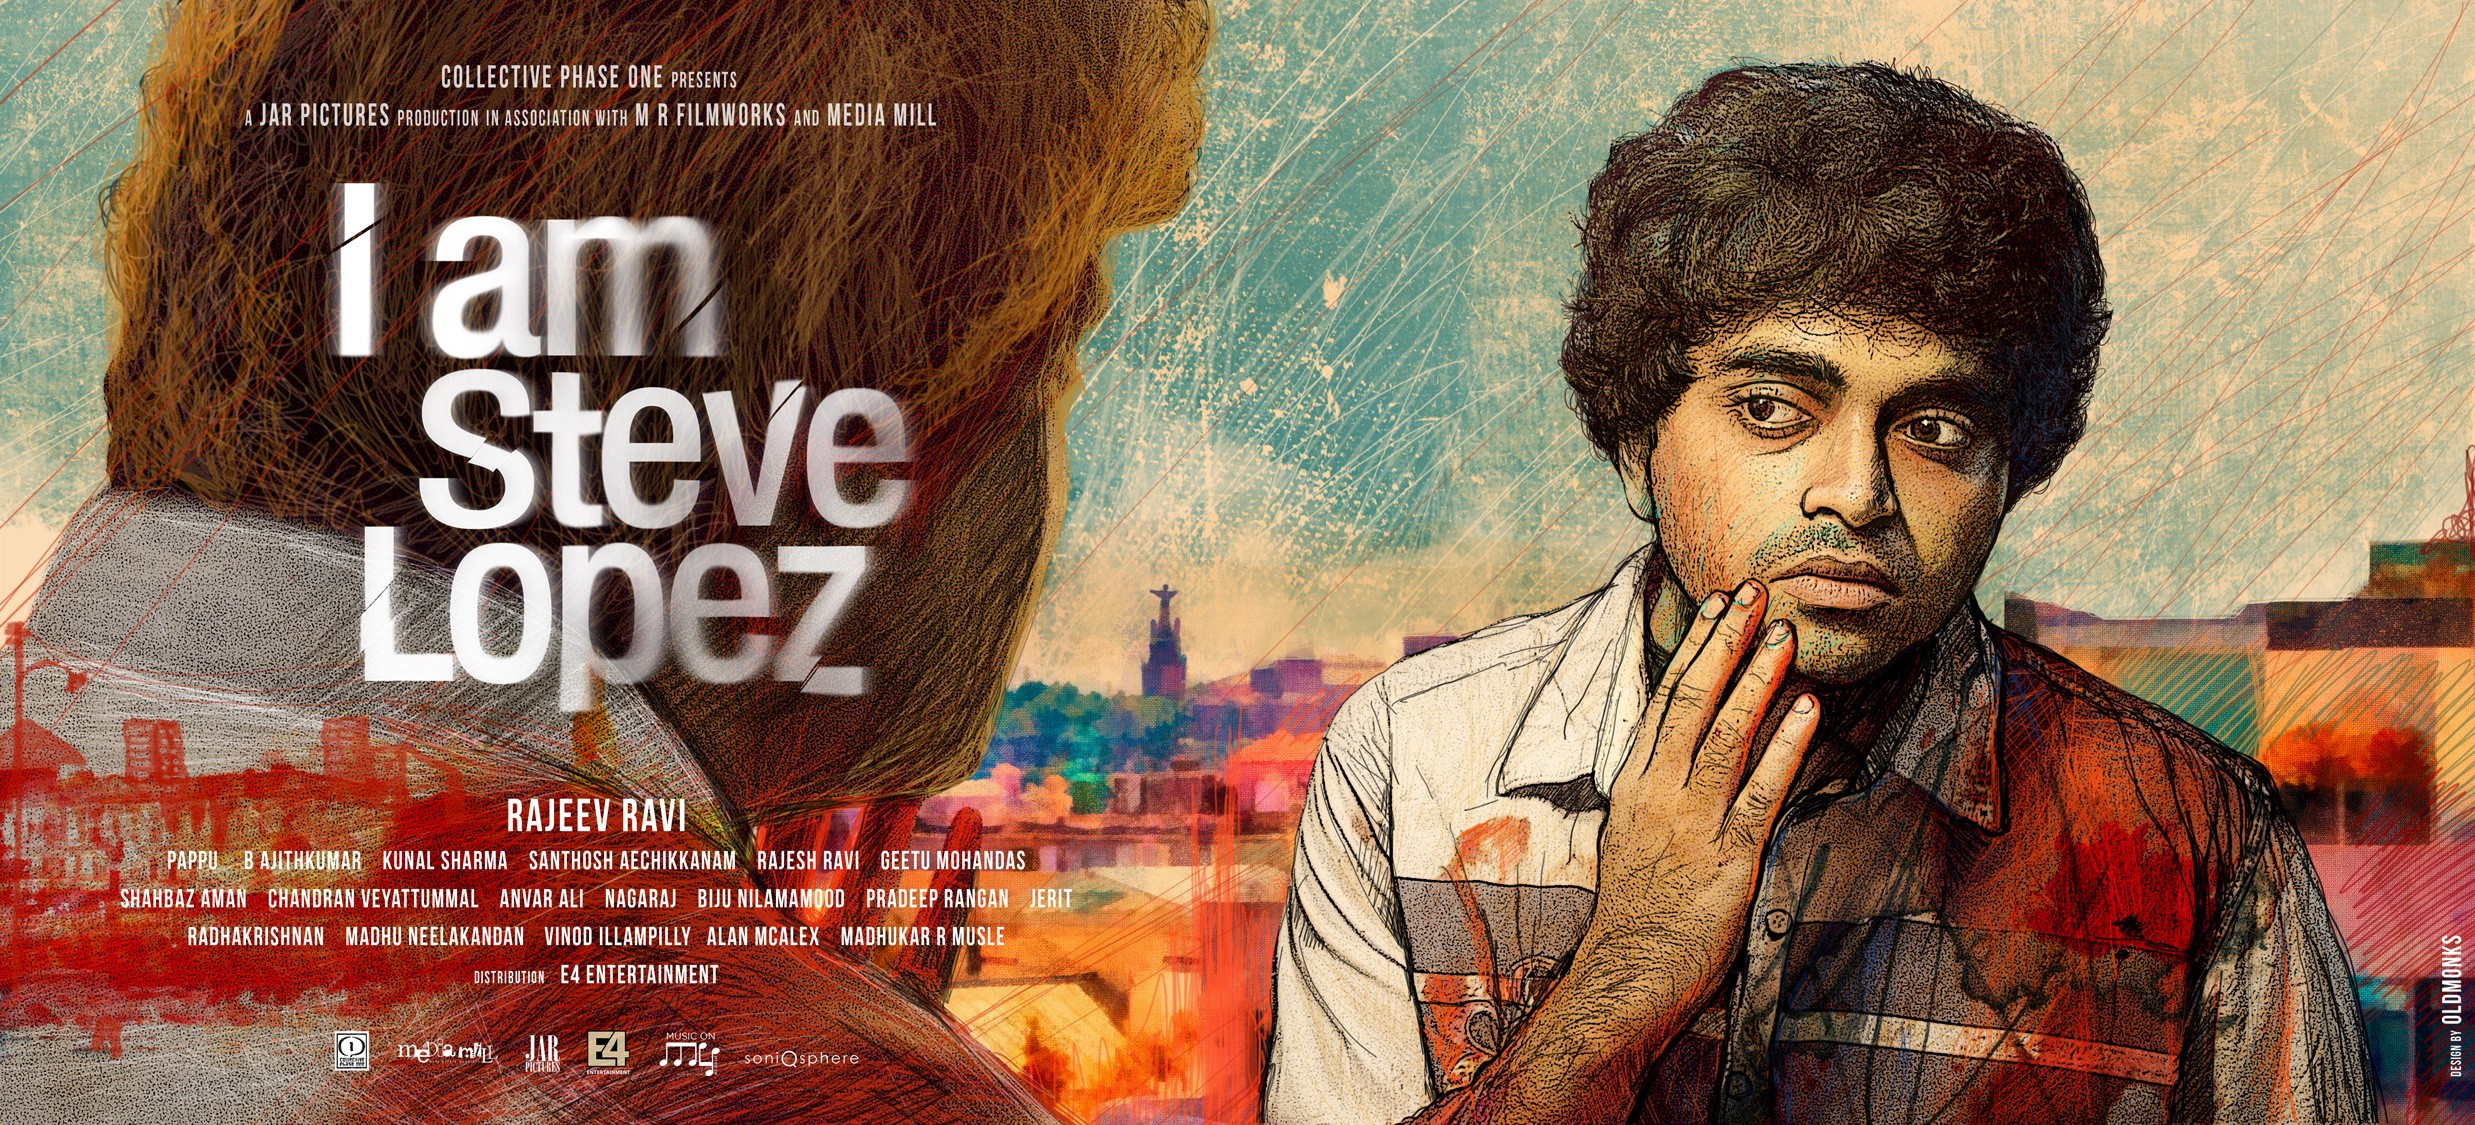 Mega Sized Movie Poster Image for Njan Steve Lopez (#6 of 7)